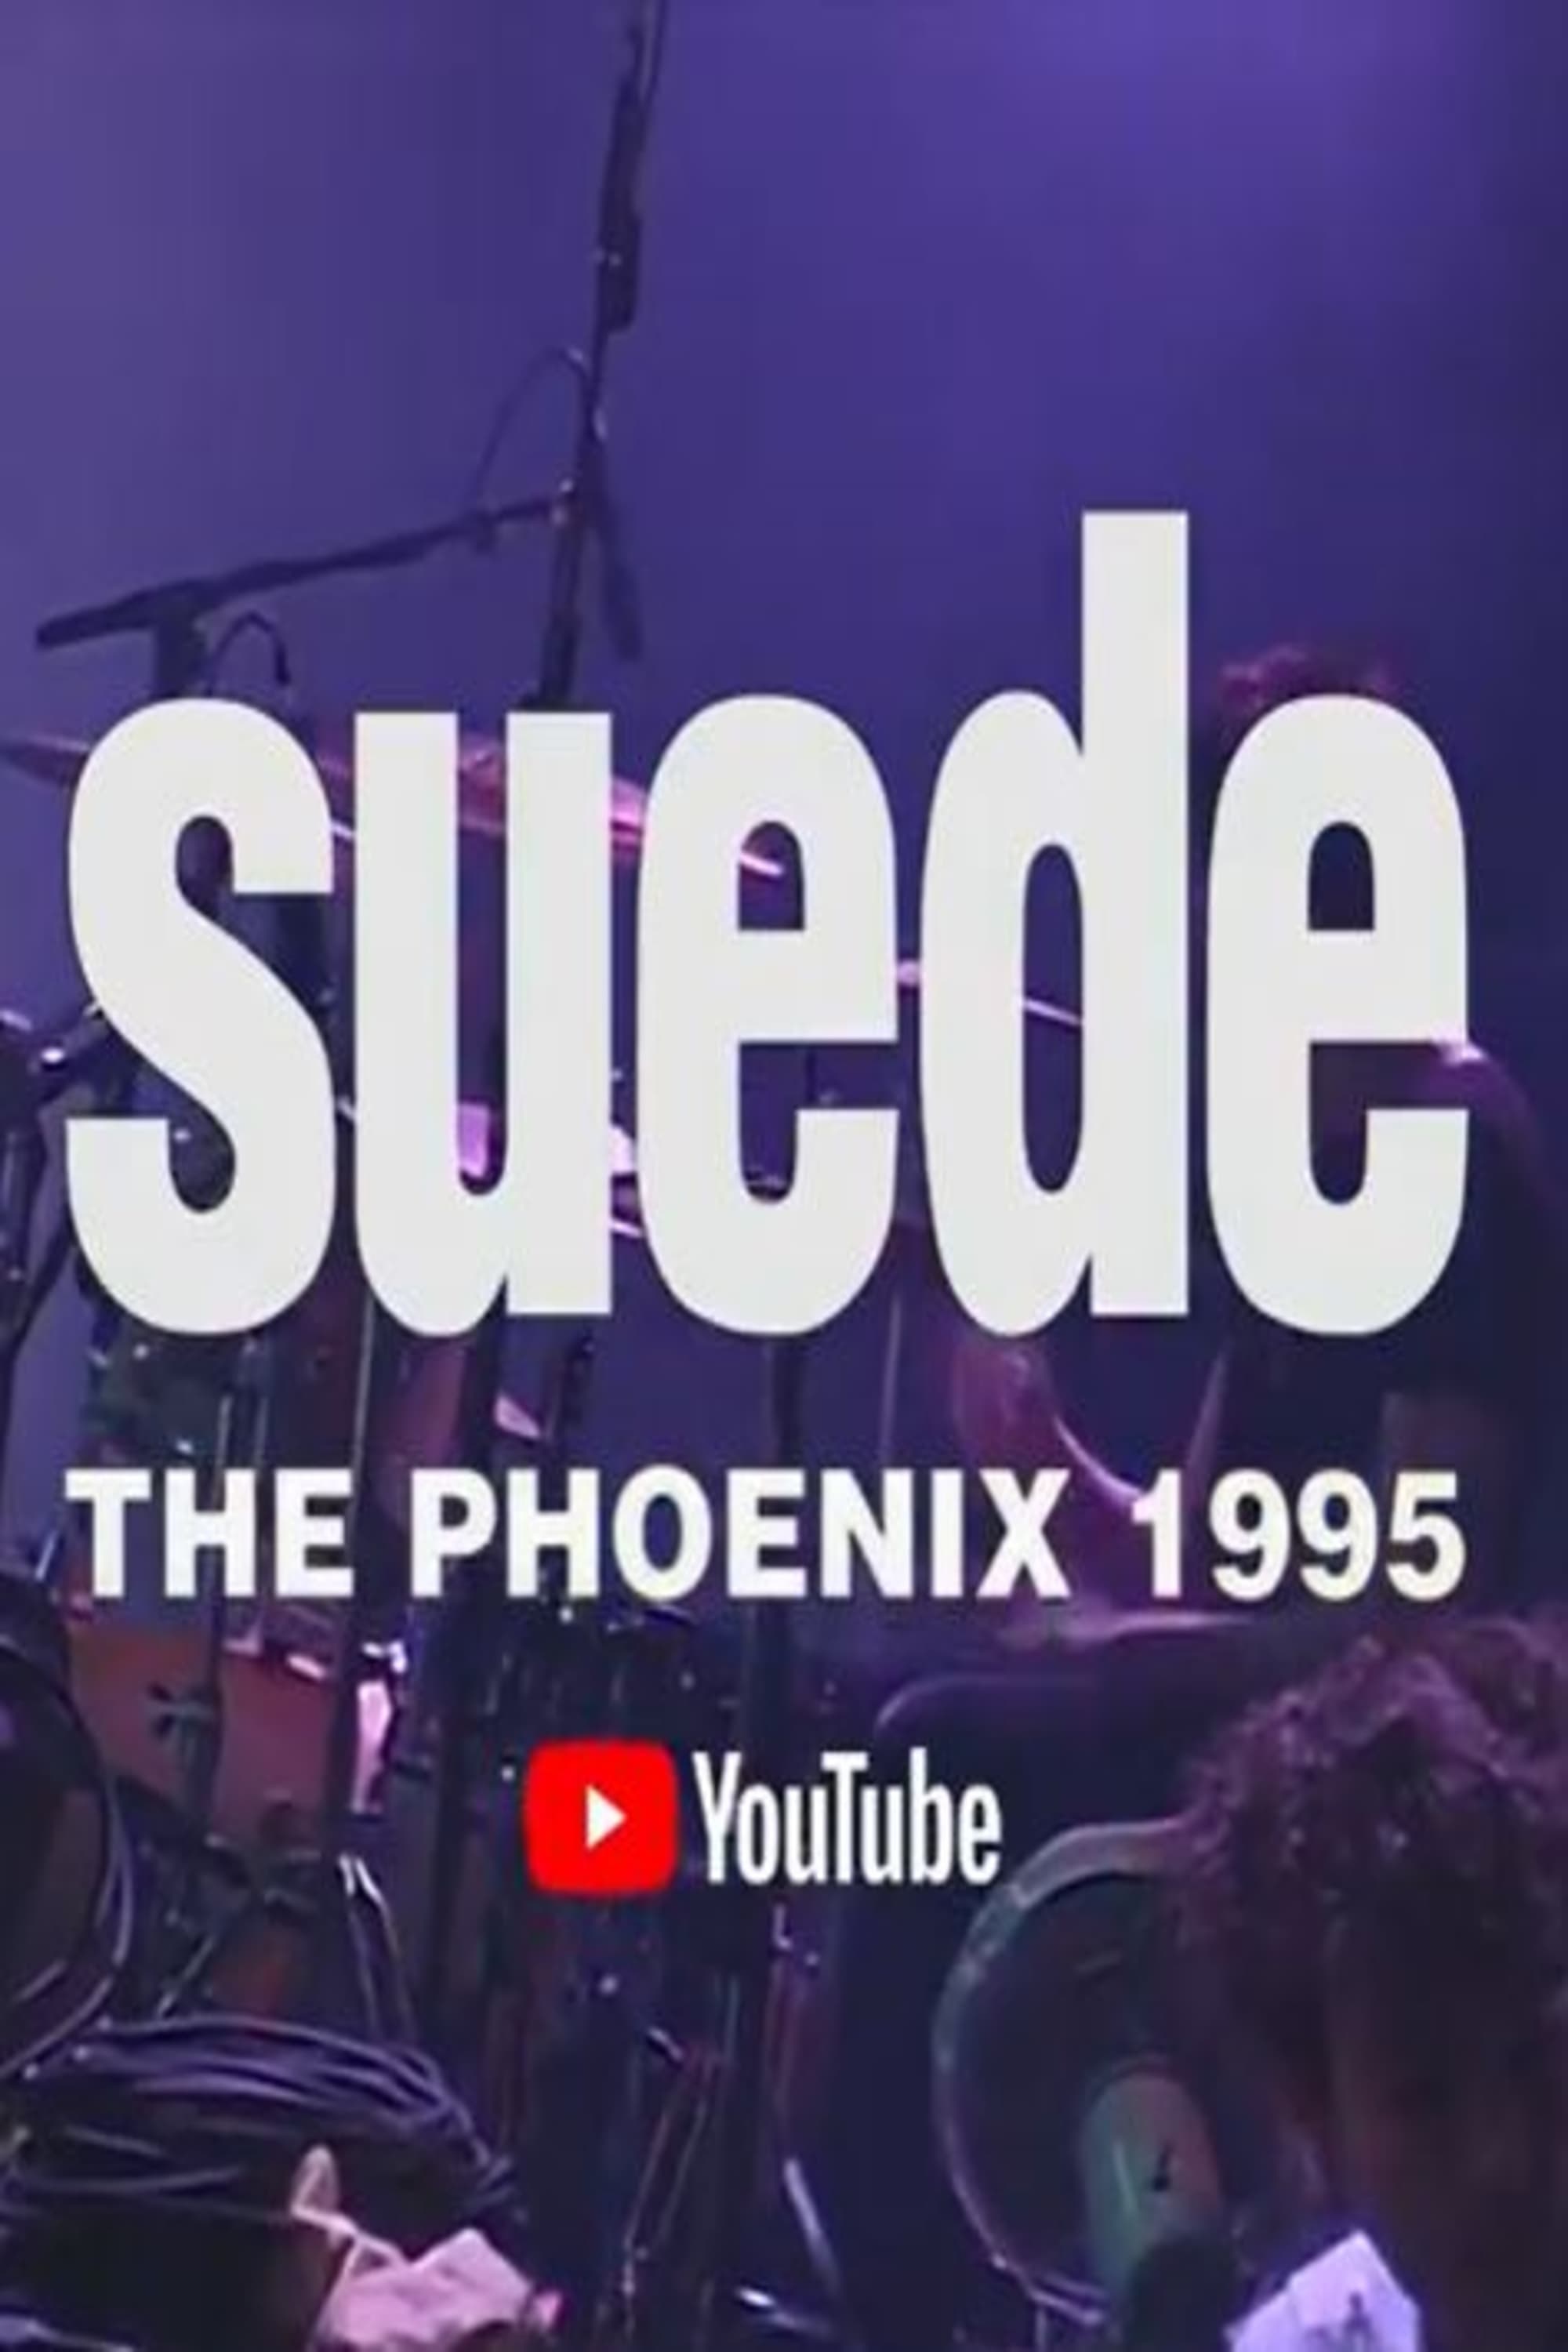 Suede - The Phoenix 1995